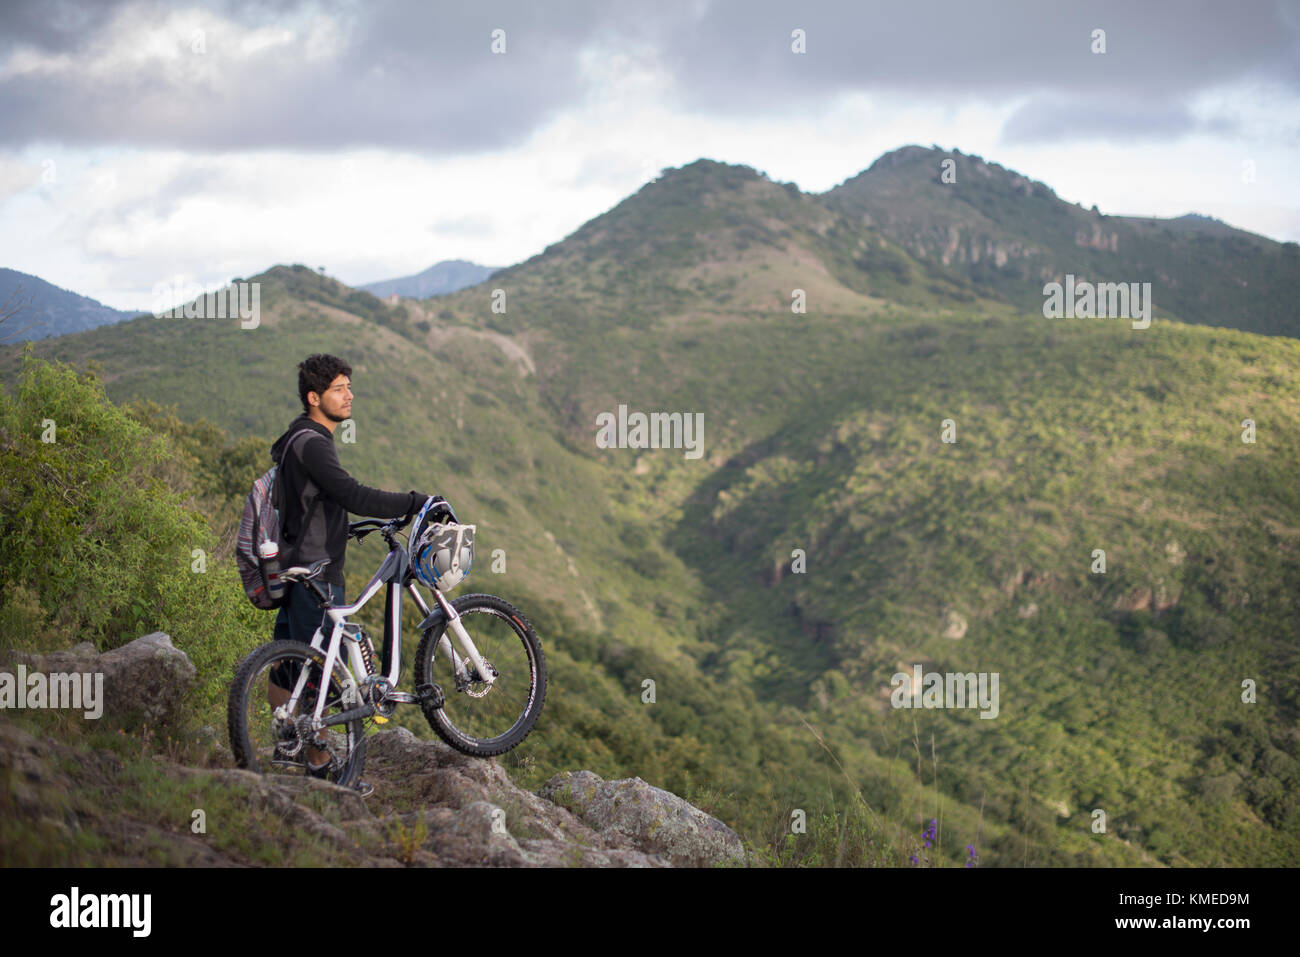 A mountain biker with his bike stears at the landscape during a trip at Joya La Barreta area in Queretaro, Mexico. Stock Photo